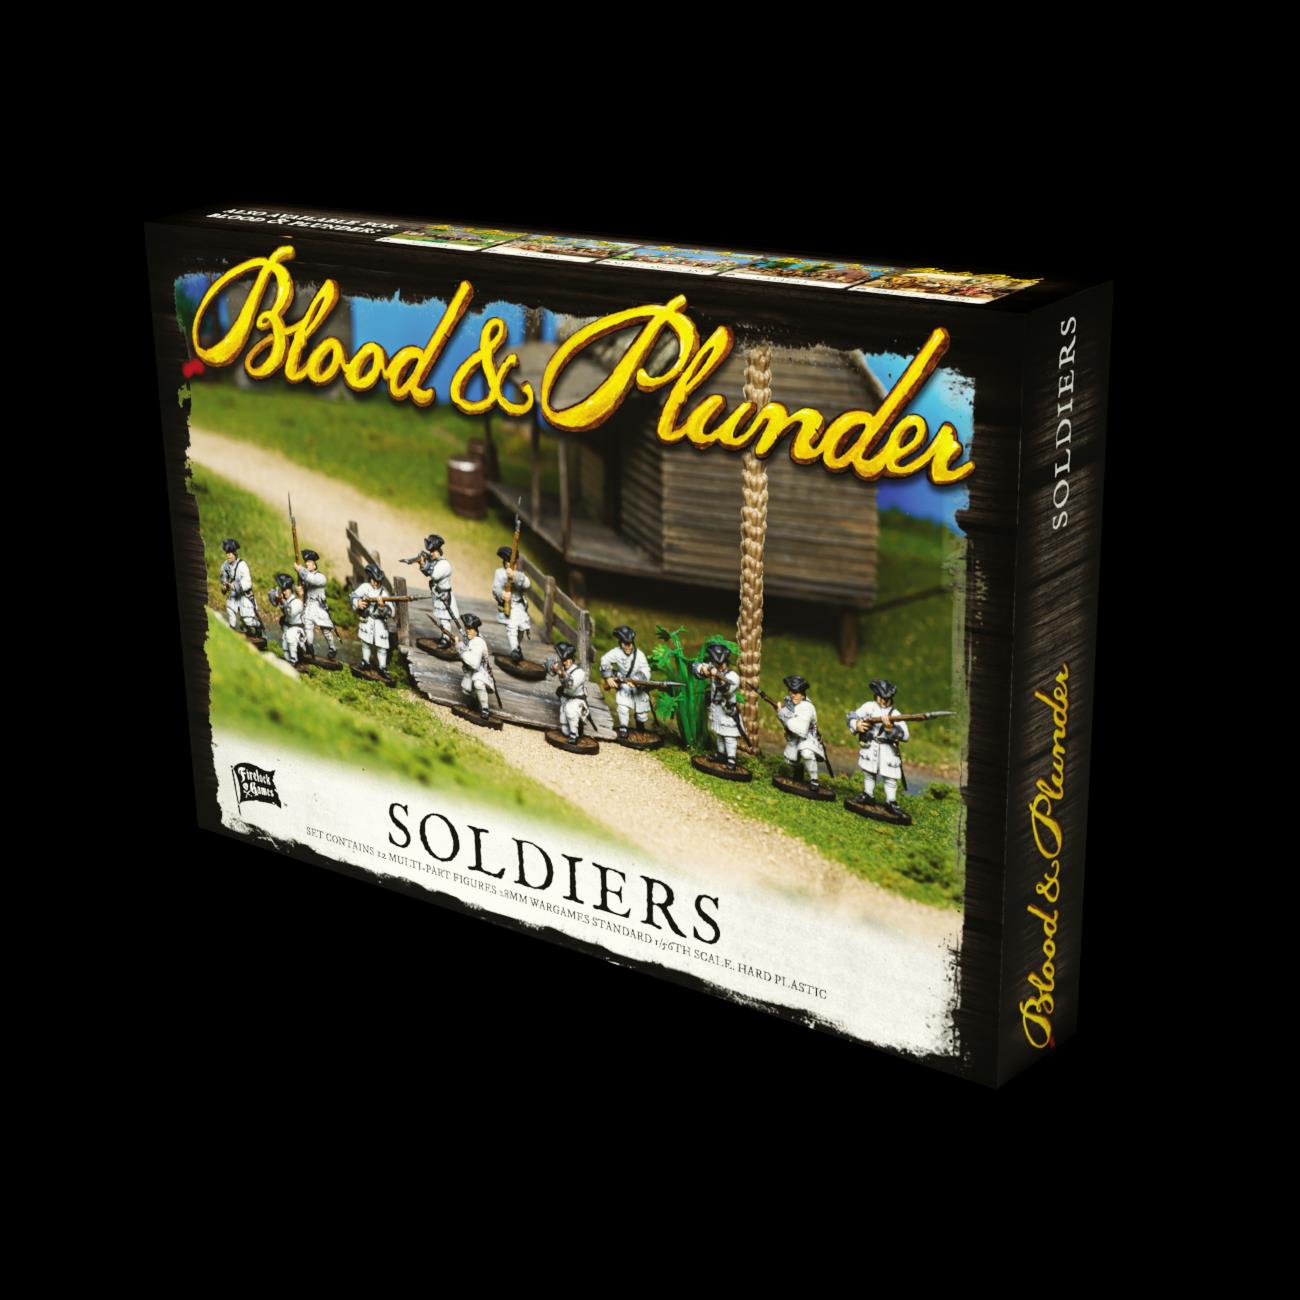 Soldiers Unit box (plastic)